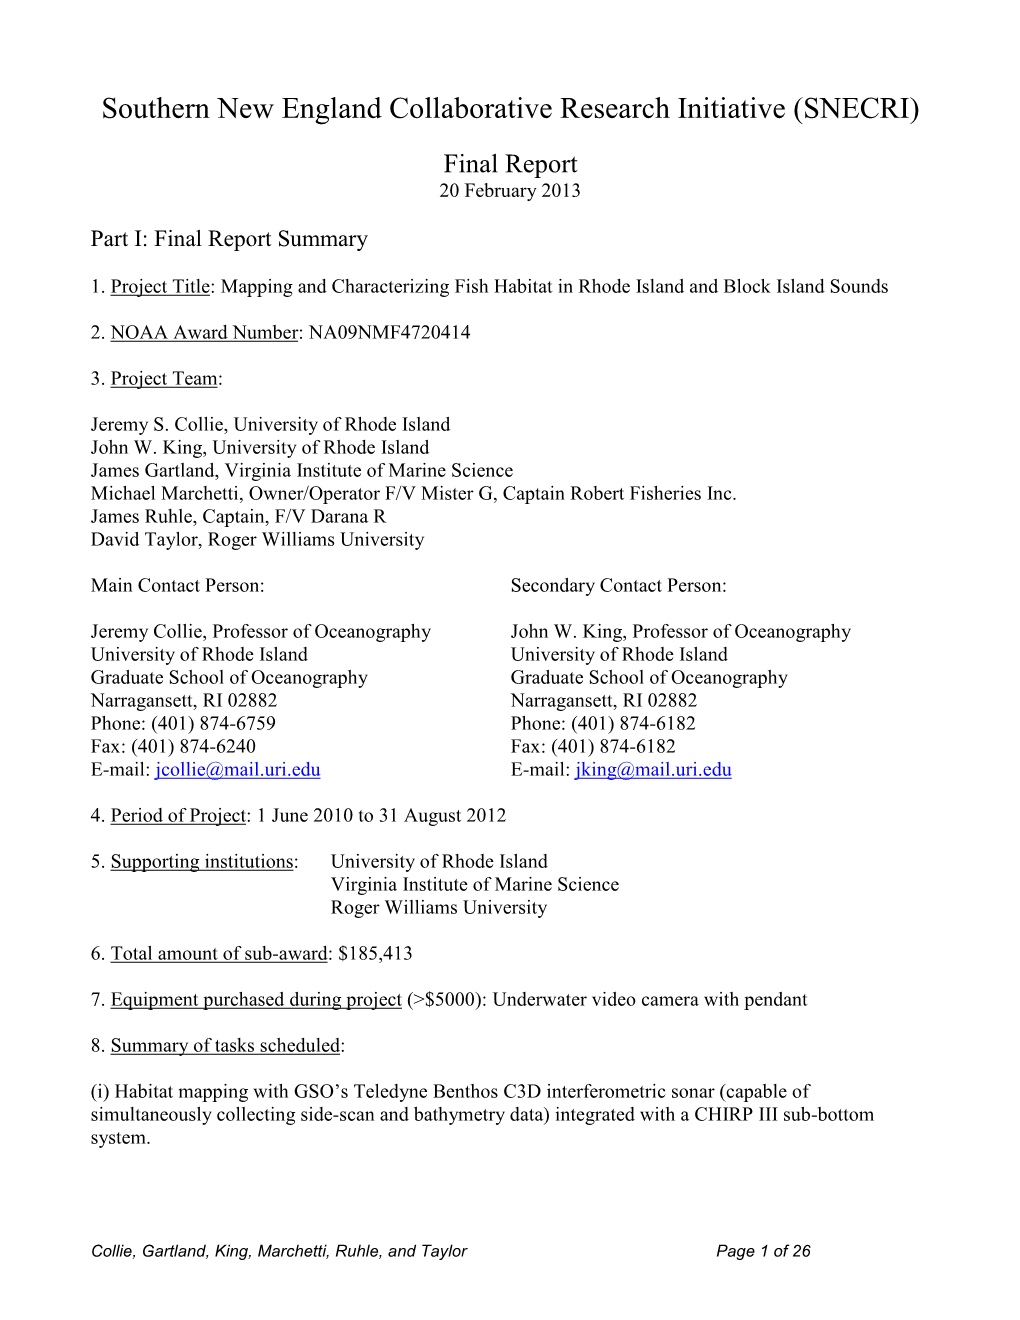 Final Report 20 February 2013